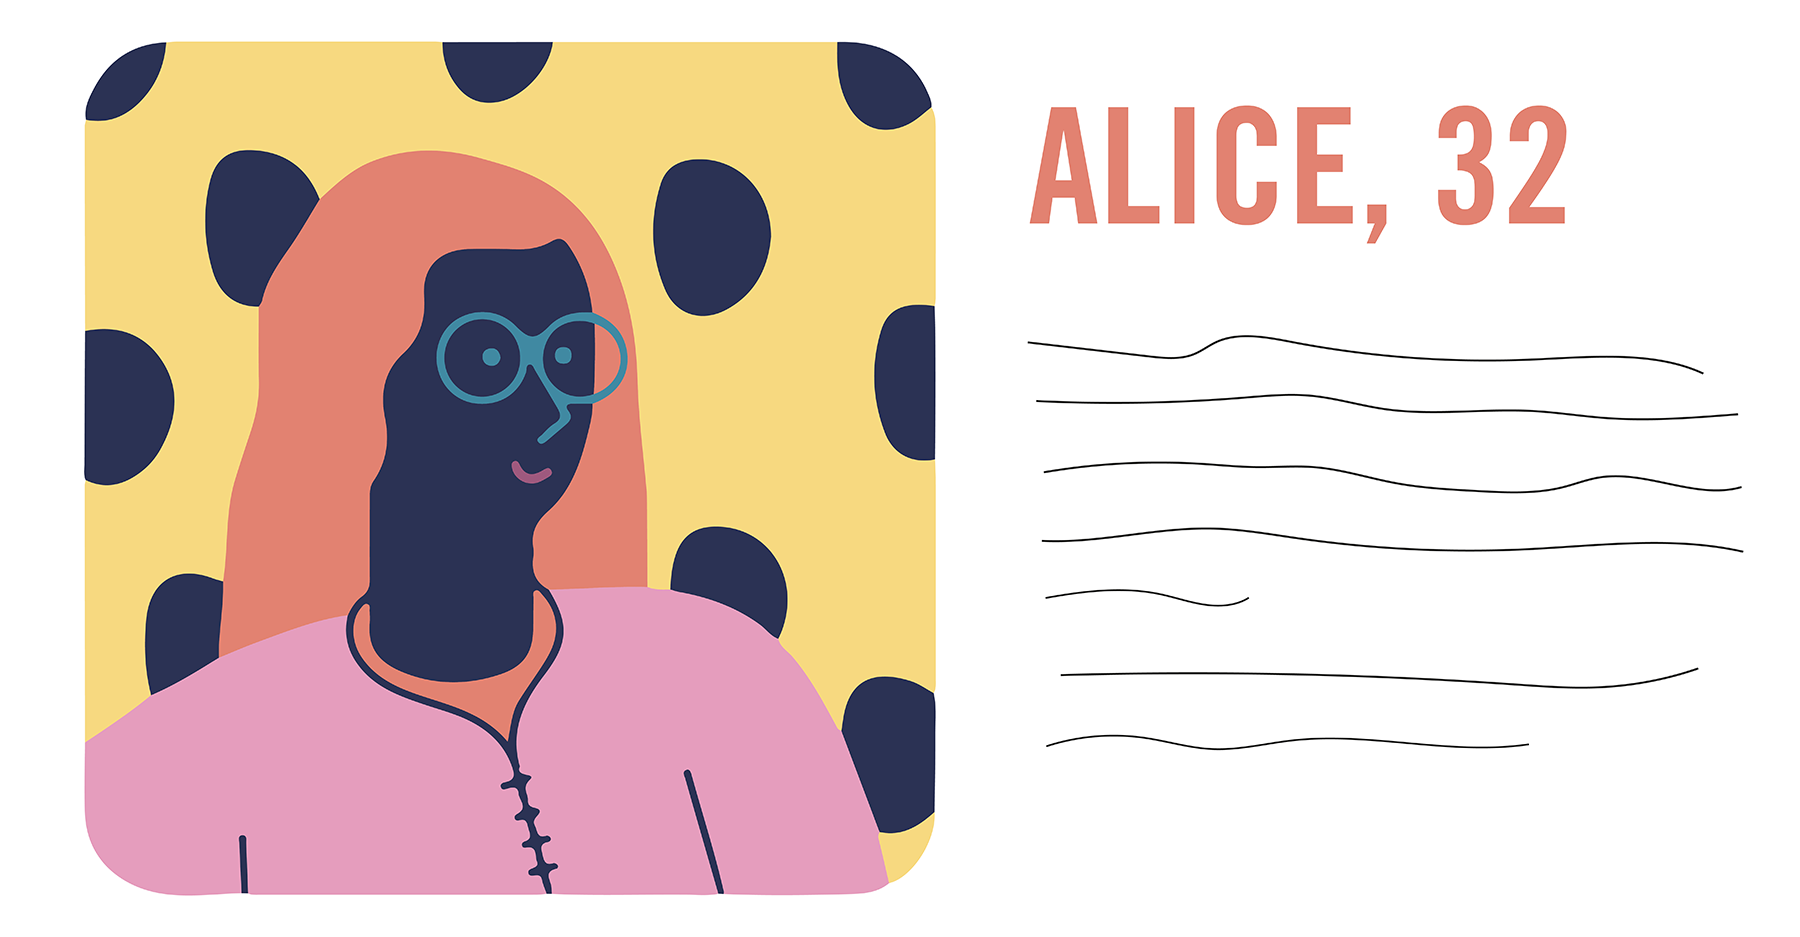 Persona illustration of Alice, aged 32